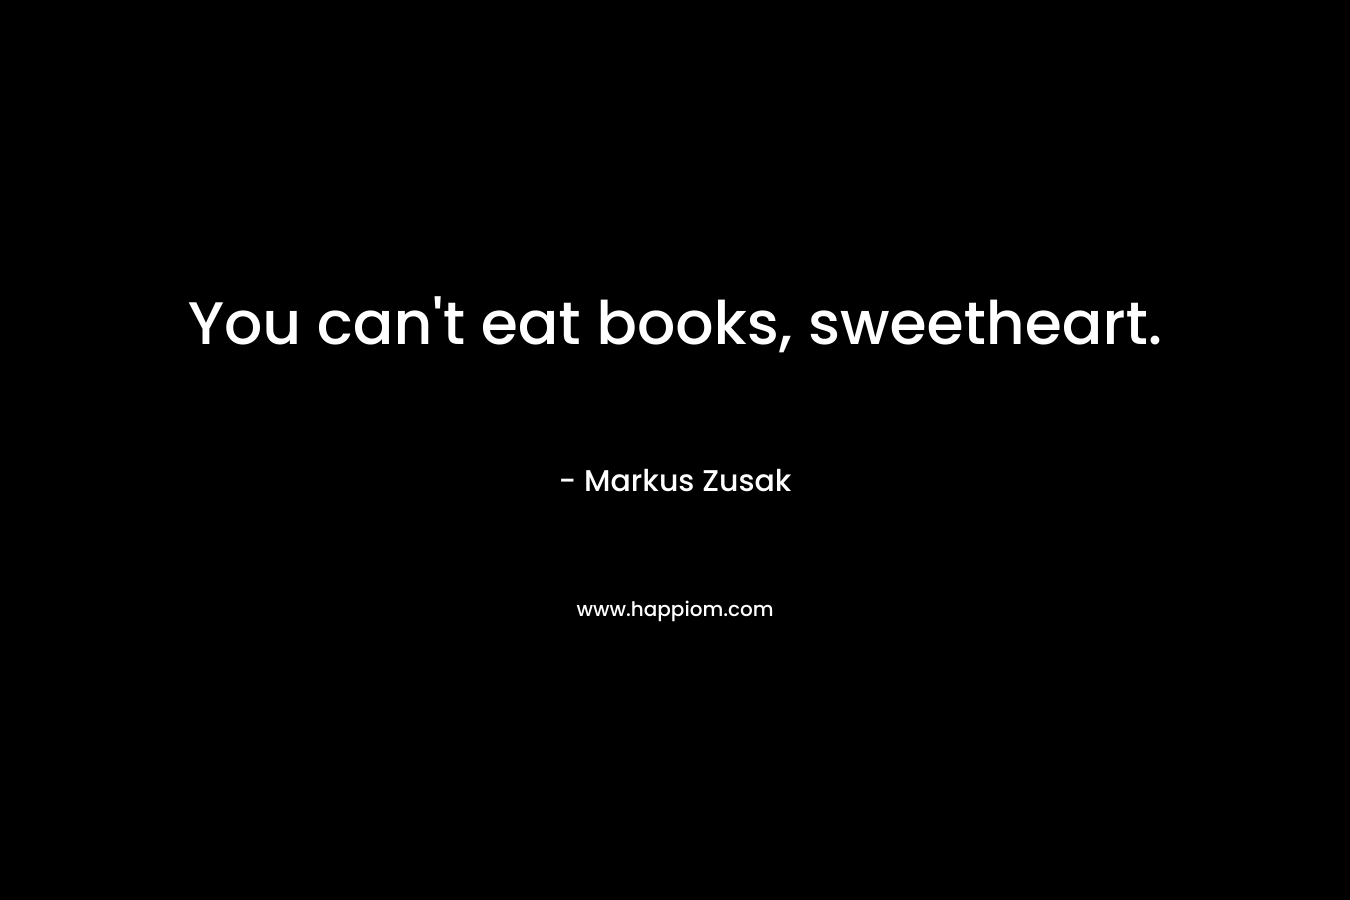 You can’t eat books, sweetheart. – Markus Zusak